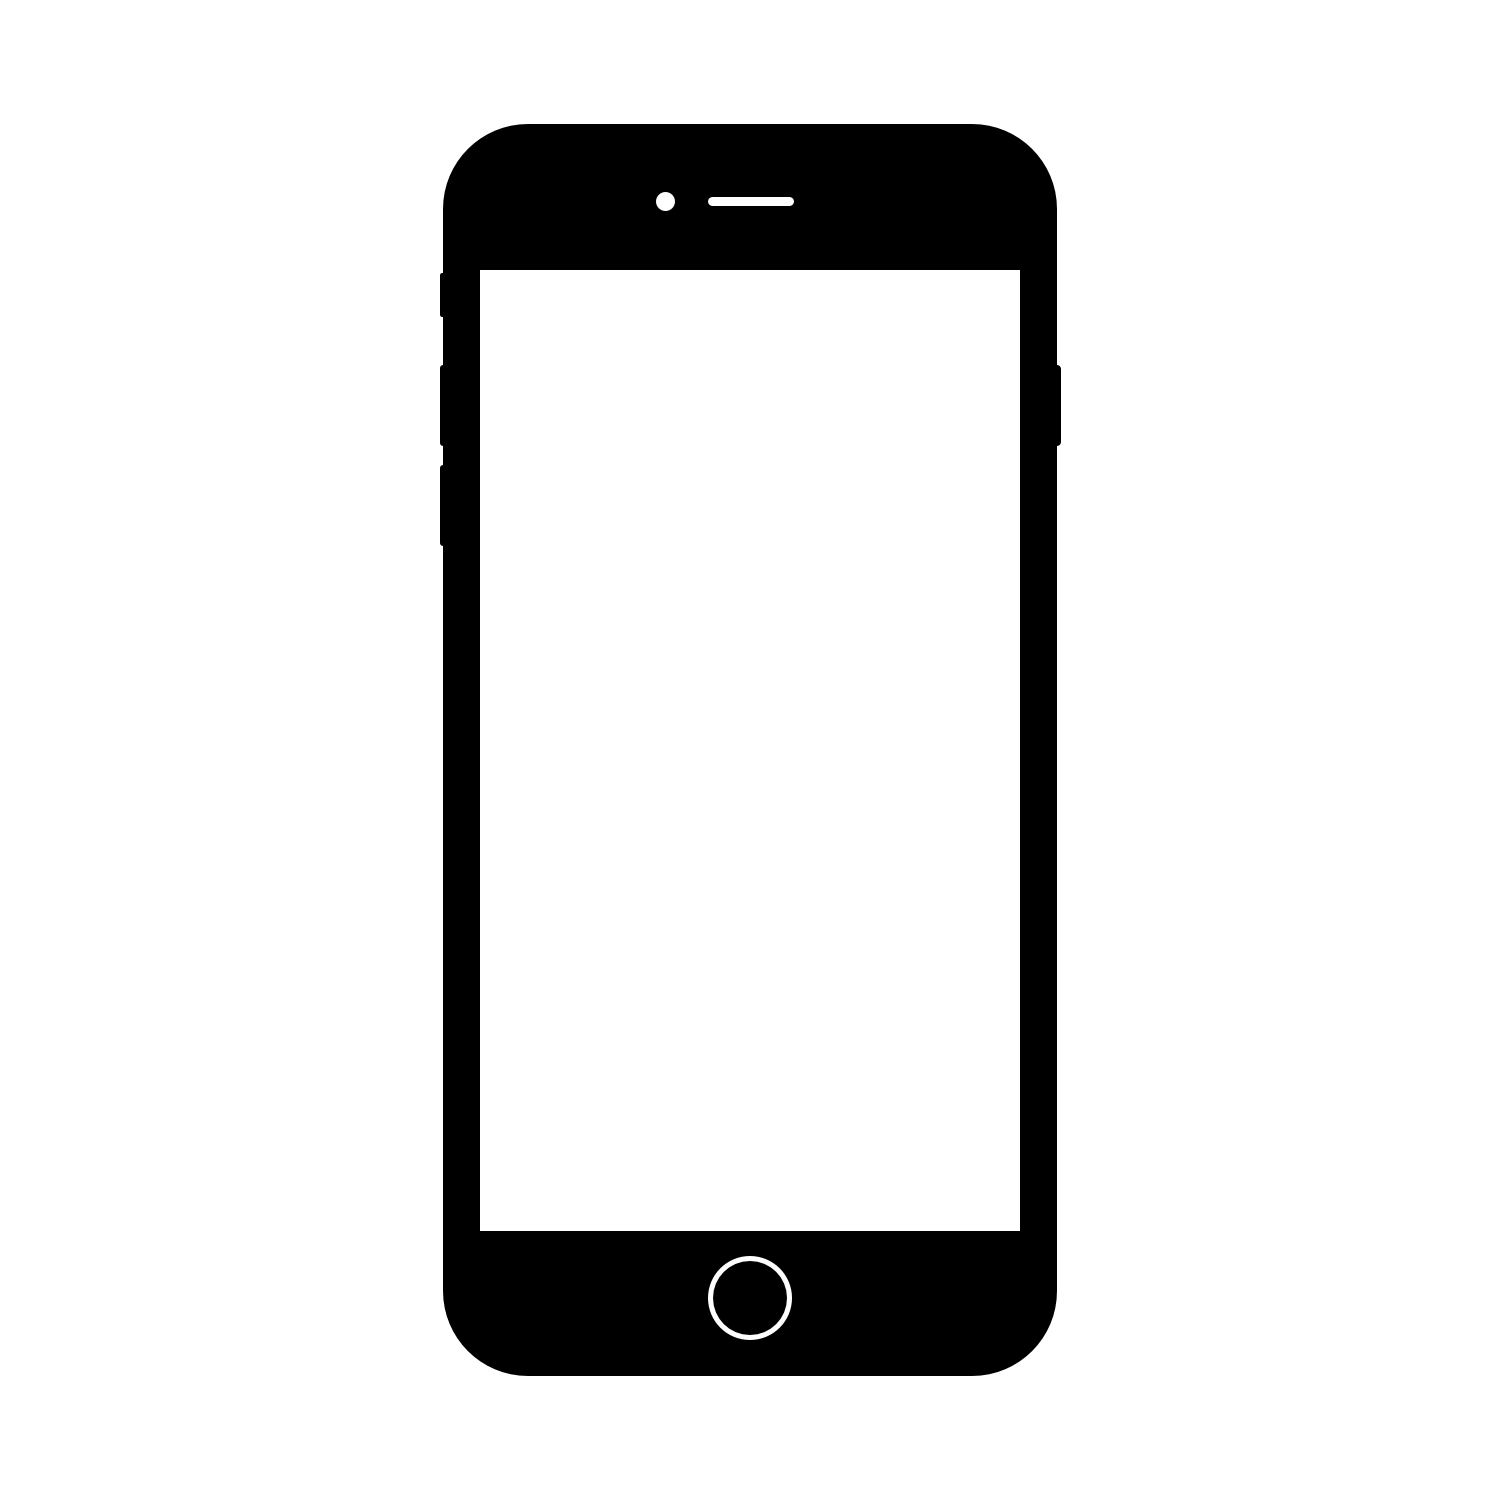 Apple Iphone 6 Plus Symbol Wallpaper Iphone 6 White Background 1500x1500 Wallpaper Teahub Io